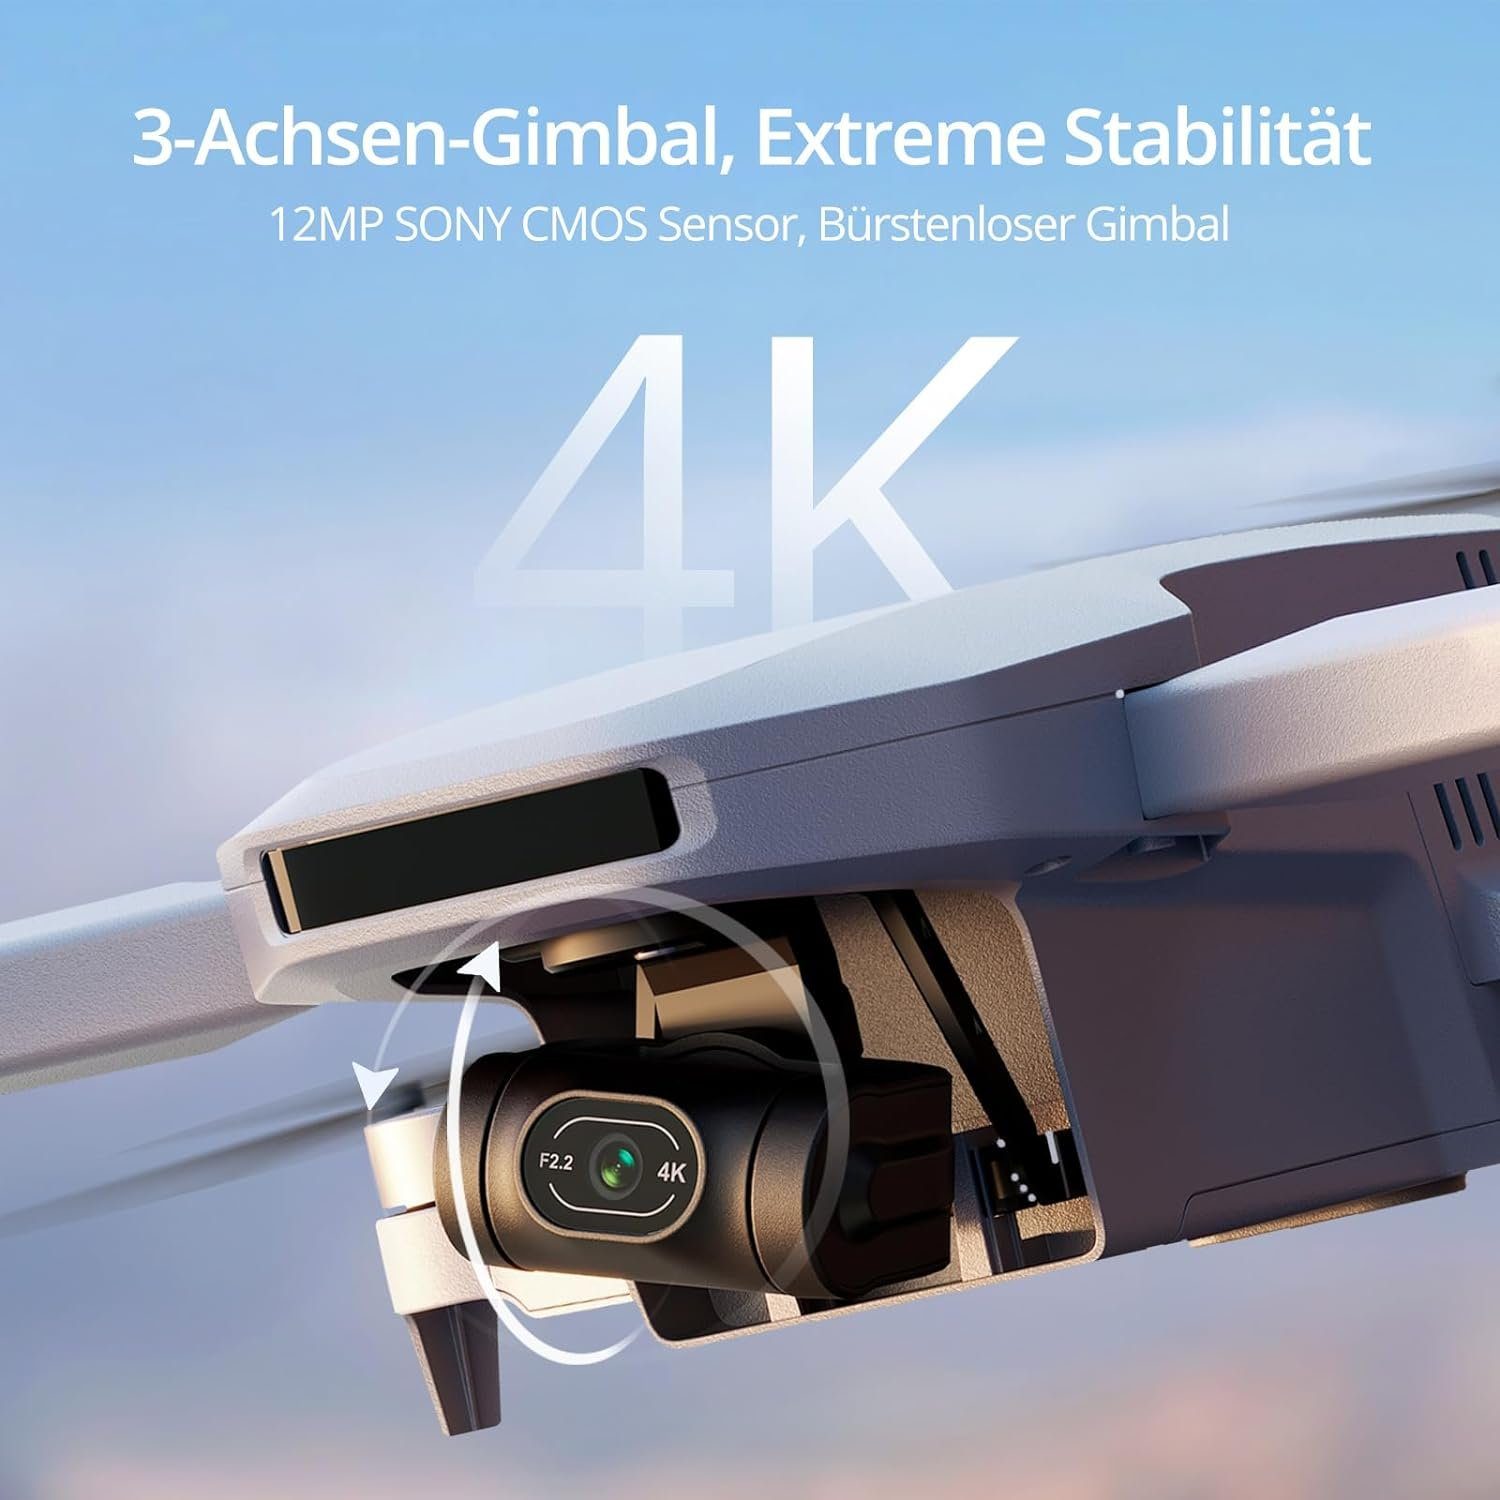 6KM FPV Min) QuickShots Visuelles Folgen Videoübertragung, Drohne RTH, (4K, Potensic 32